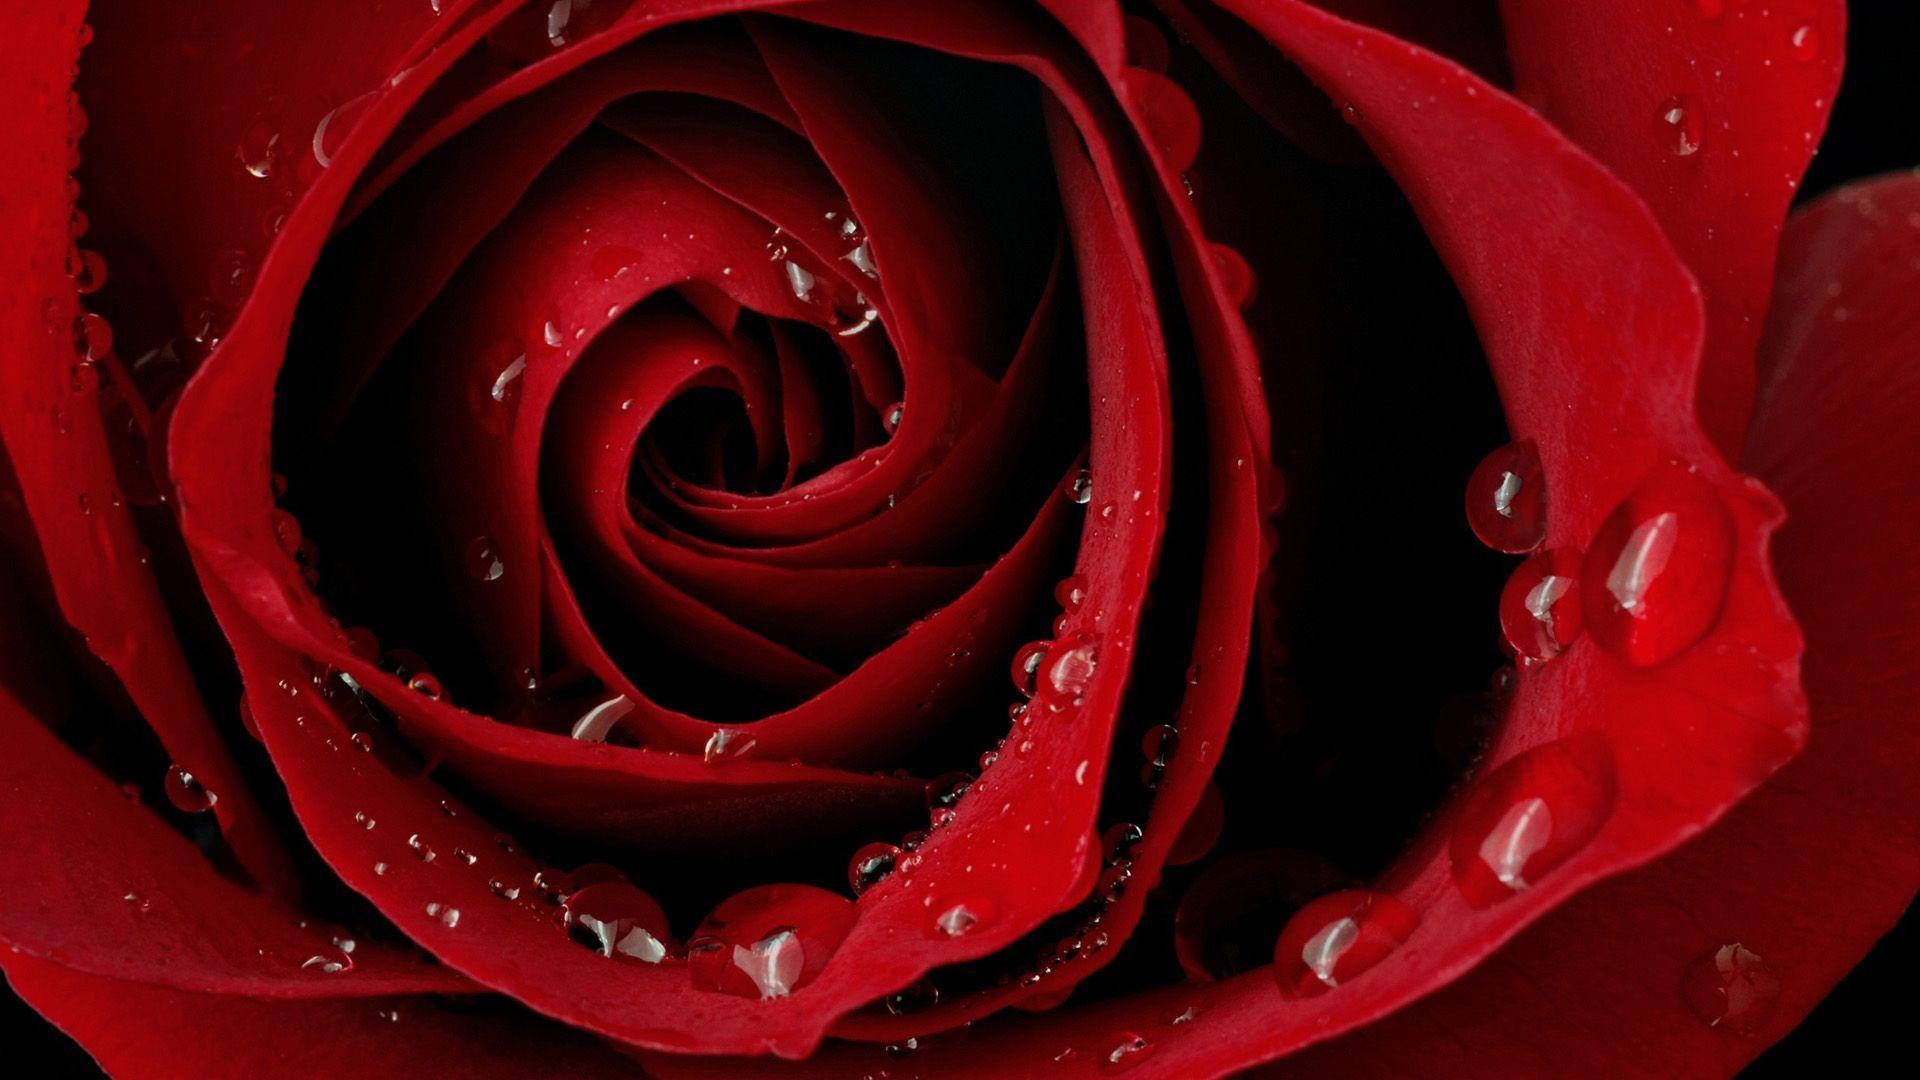 Rose 1080p Flowers Hd For Desktop HD wallpaper